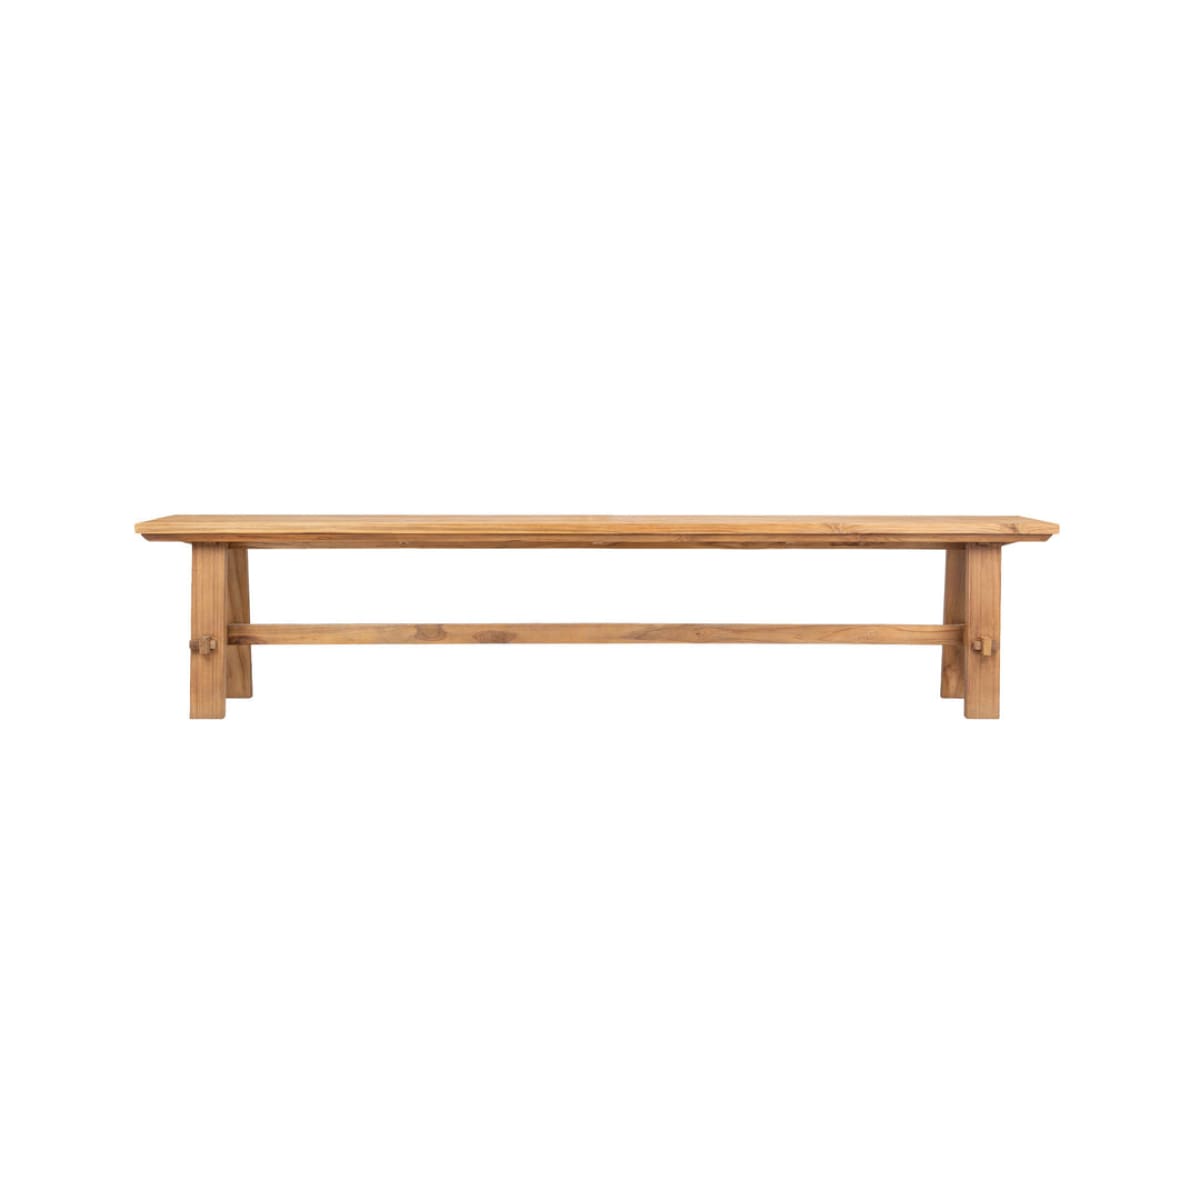 D-Bodhi Artisan Bench - lh-import-dining-benches